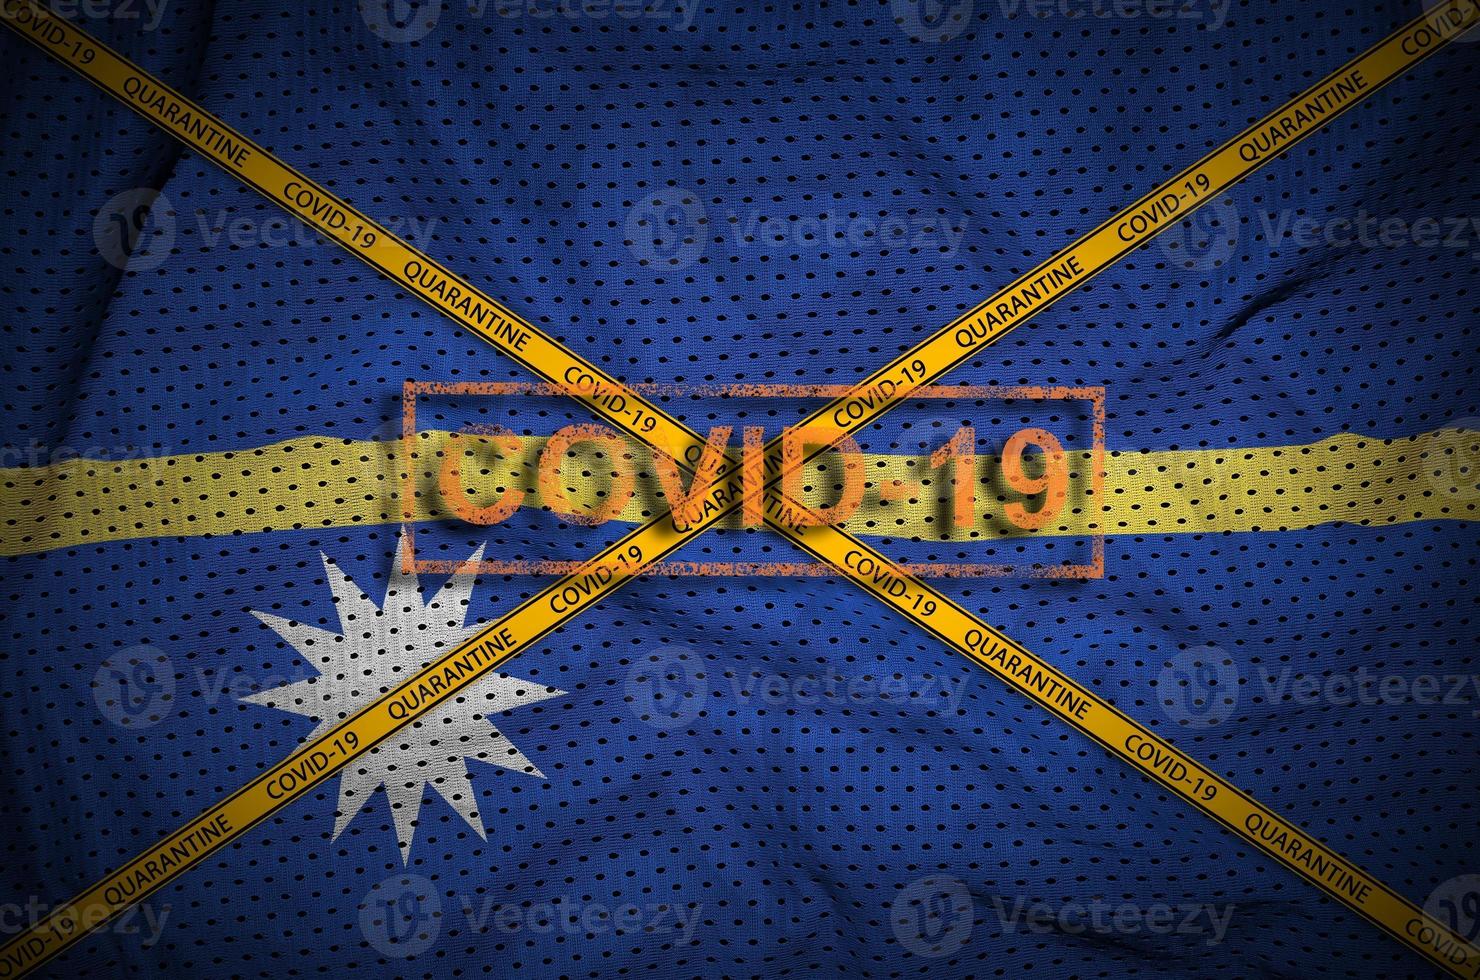 Nauru flag and Covid-19 stamp with orange quarantine border tape cross. Coronavirus or 2019-nCov virus concept photo